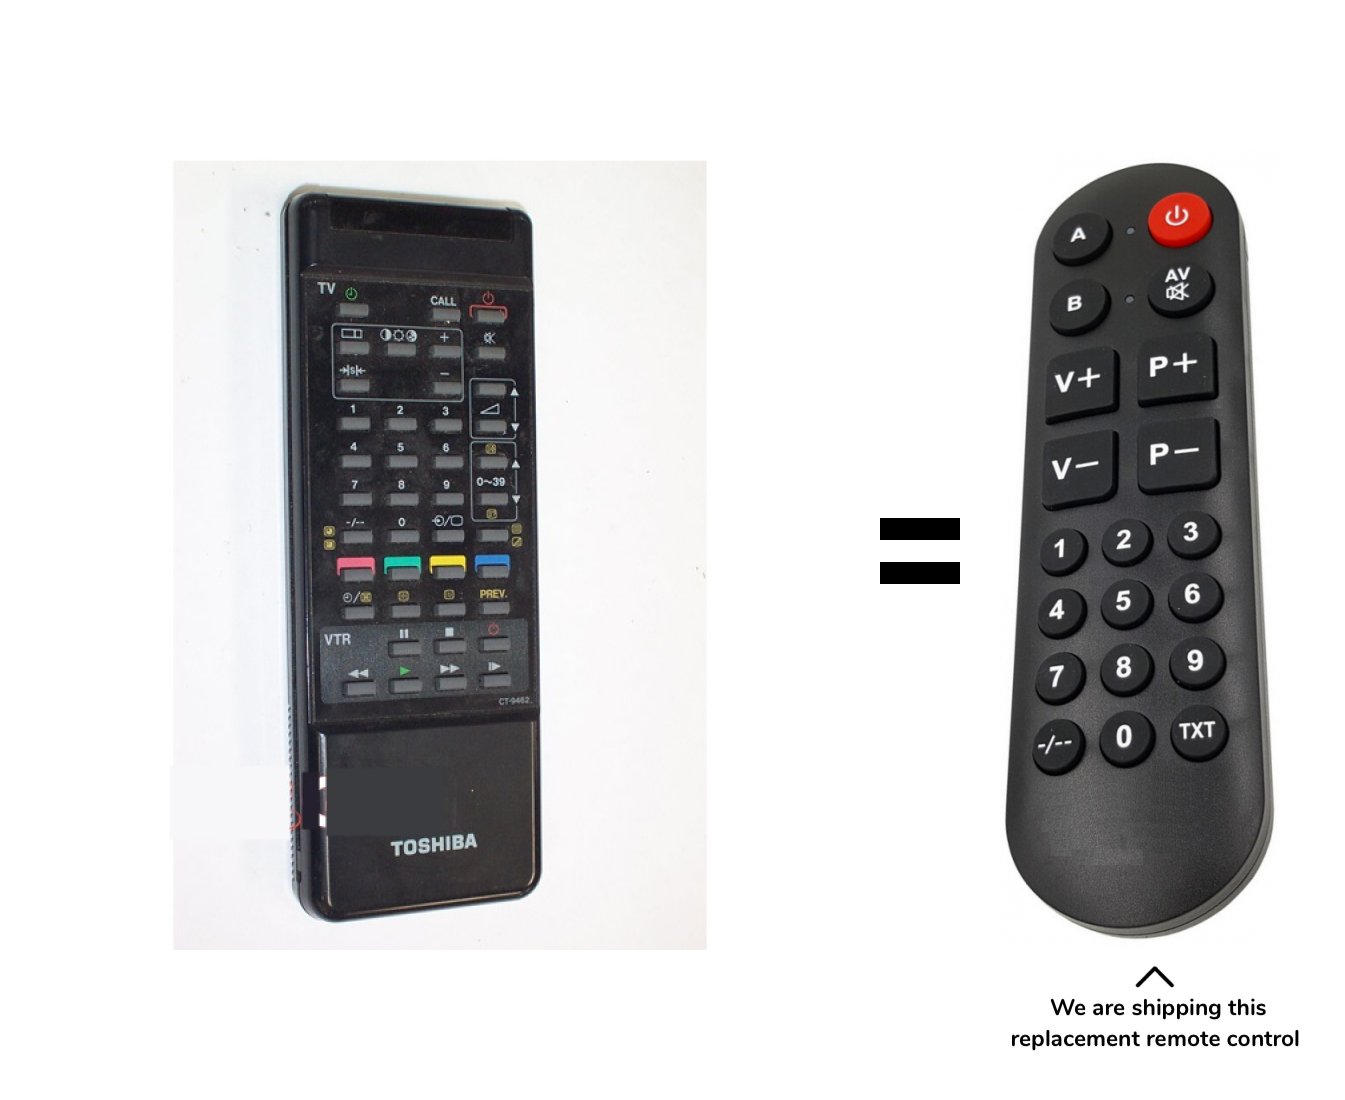 Toshiba CT-9386 remote control for seniors